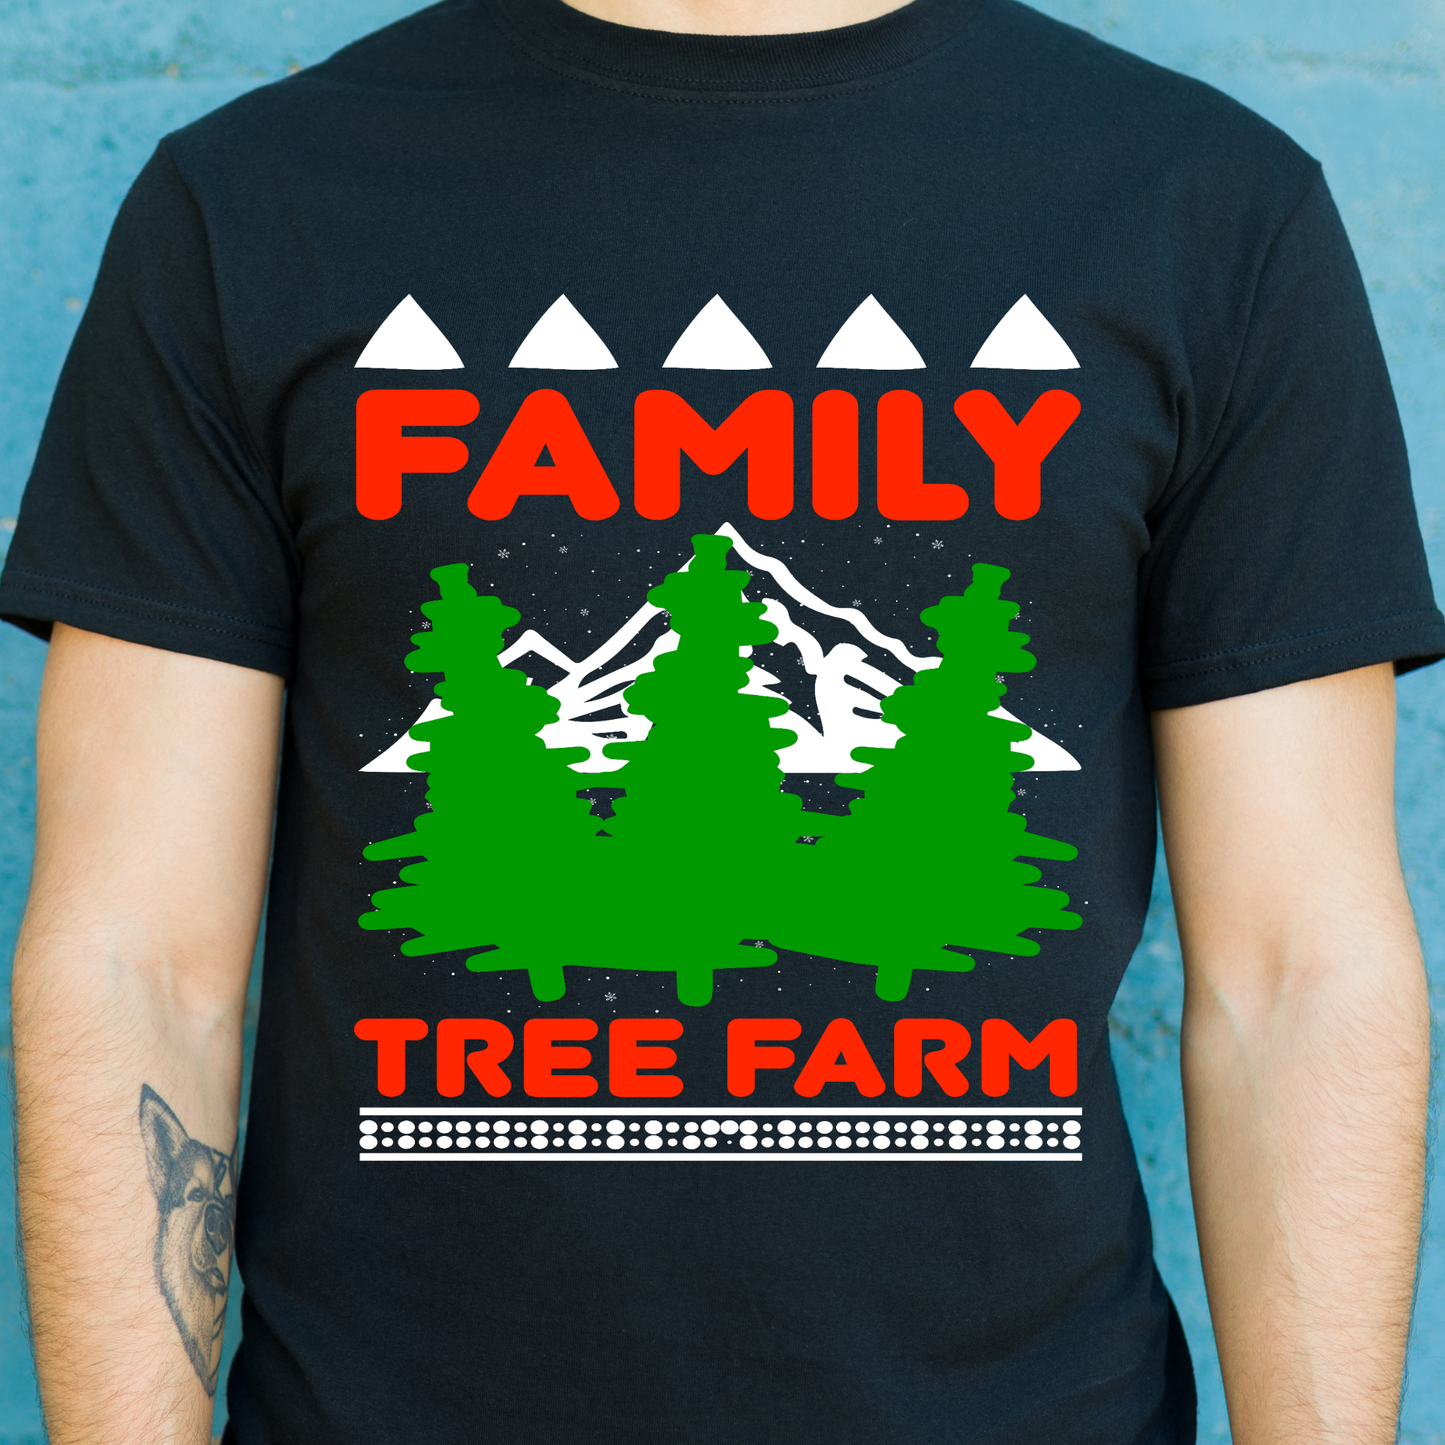 Family tree farm Christmas Men's farm t-shirt - Premium t-shirt from Lees Krazy Teez - Just $19.95! Shop now at Lees Krazy Teez